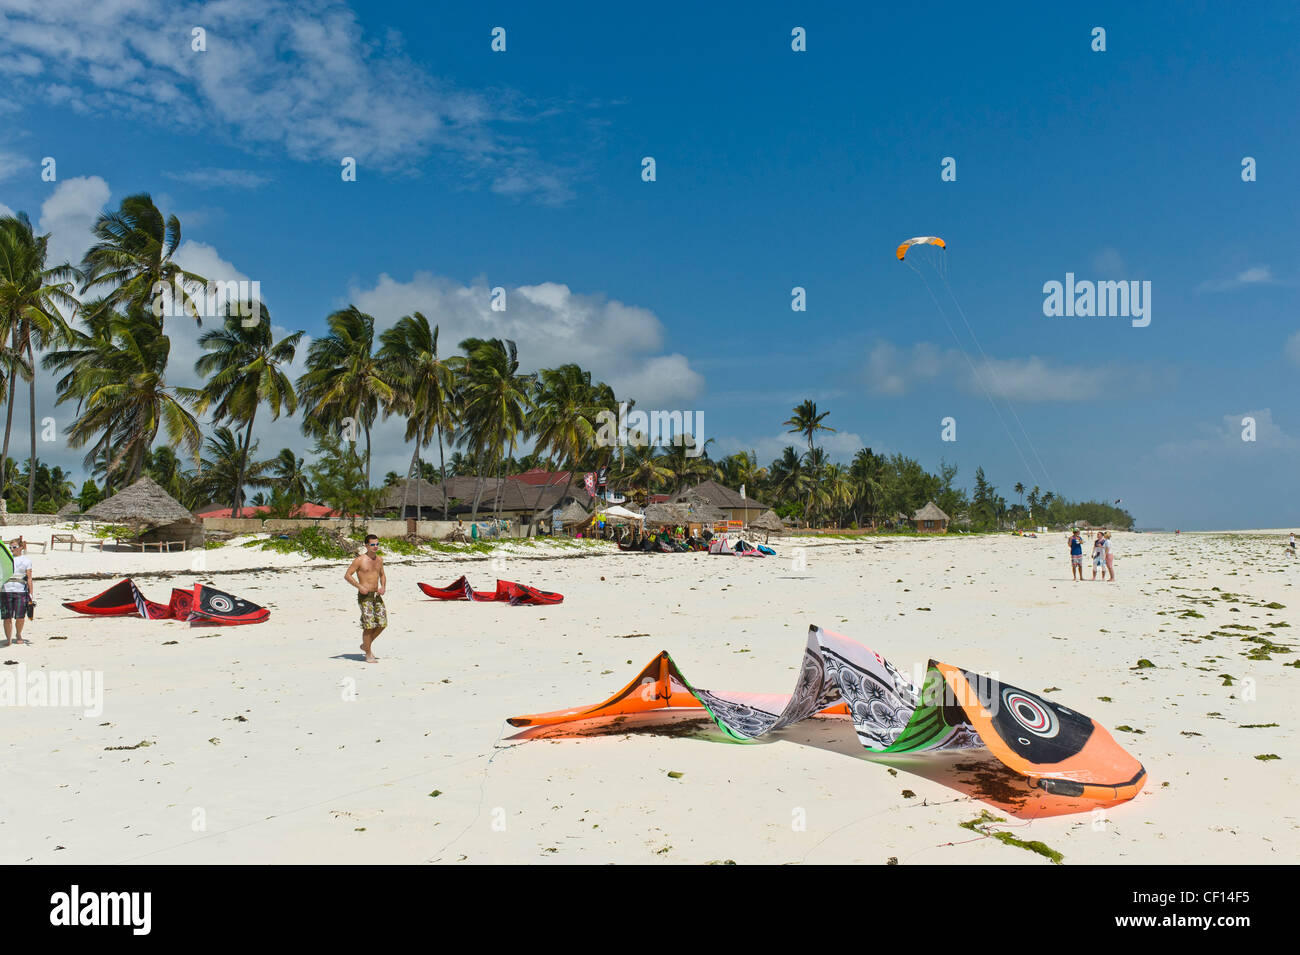 Kites and kite surfers on the beach in Paje, Zanzibar, Tanzania Stock Photo